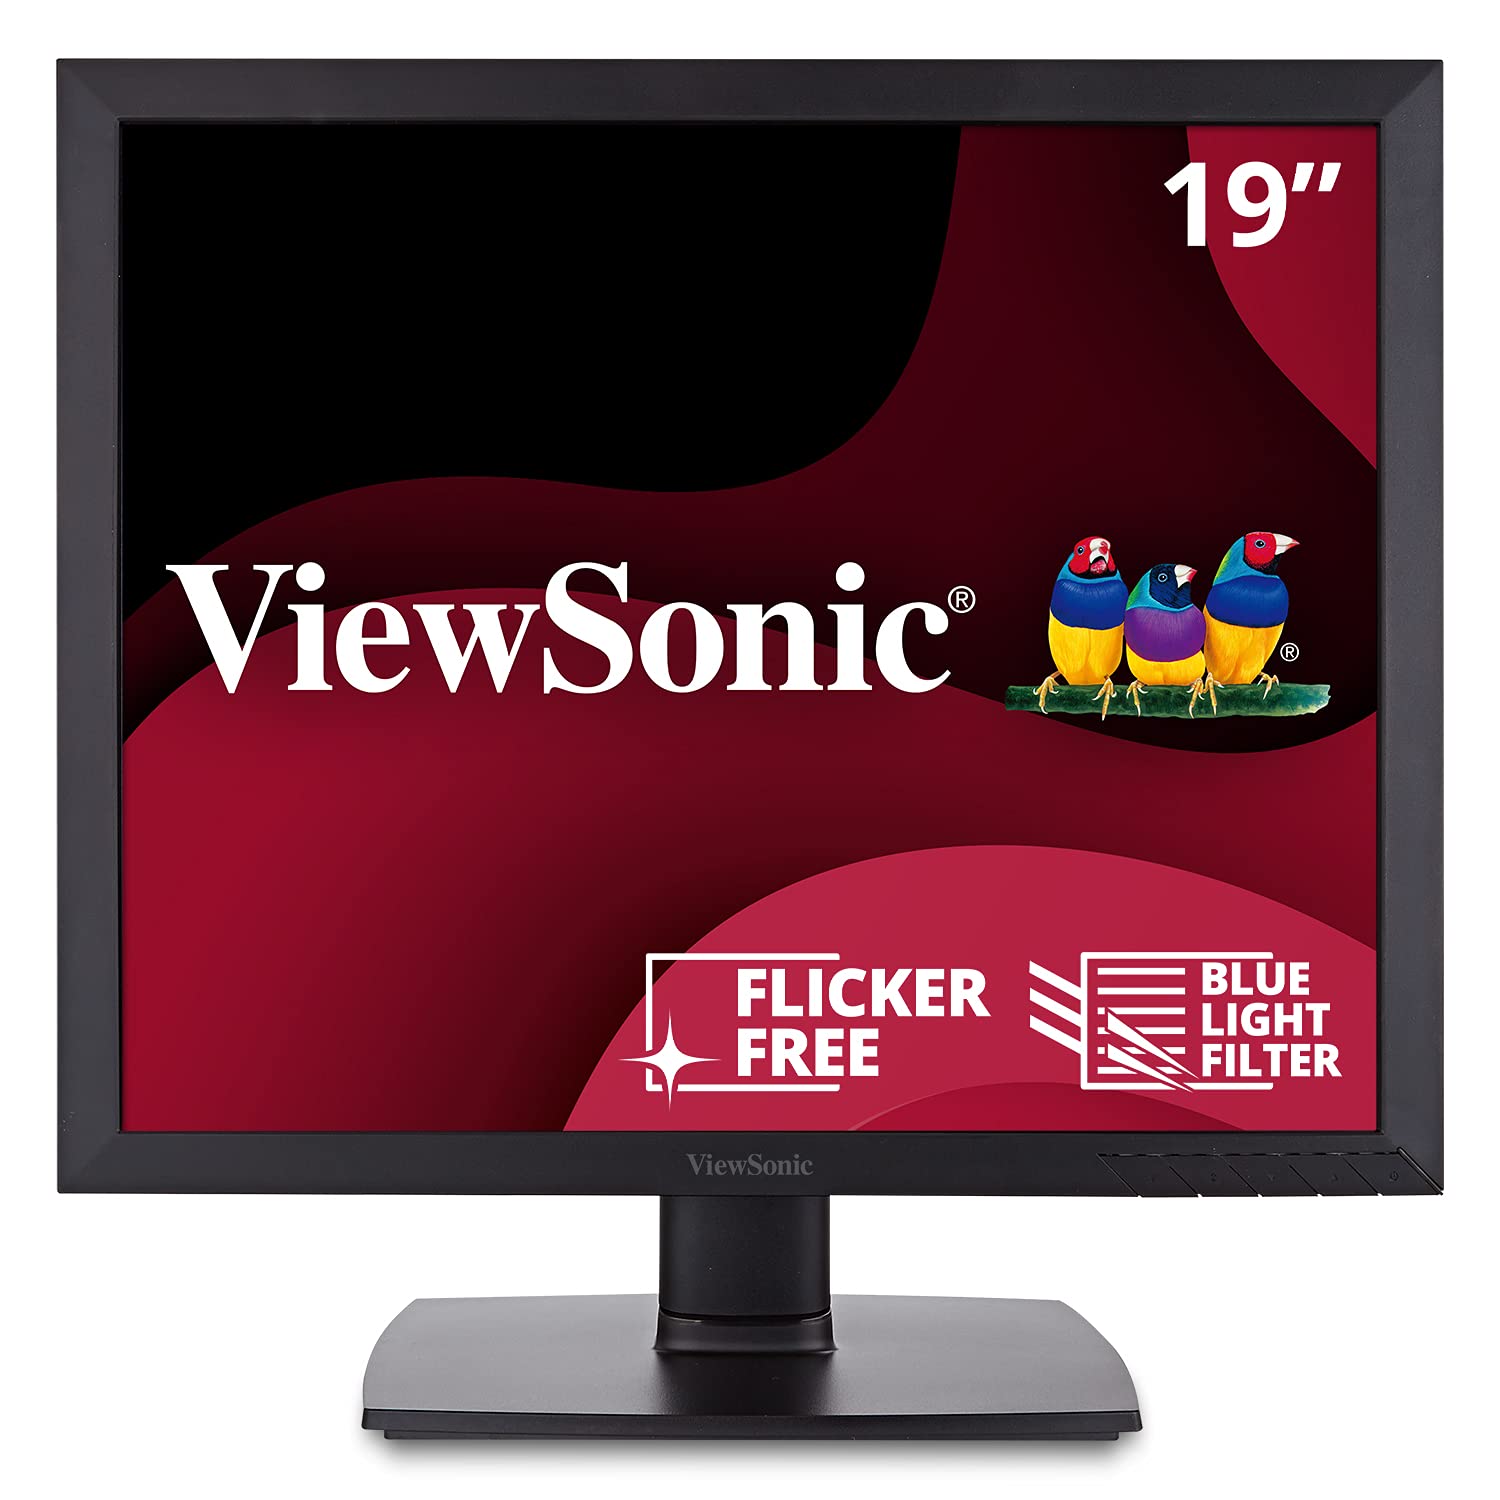 Viewsonic VA951S 19 英寸 IPS 1024p LED 显示器，带 DVI VGA 和增强的观看舒适度，黑色